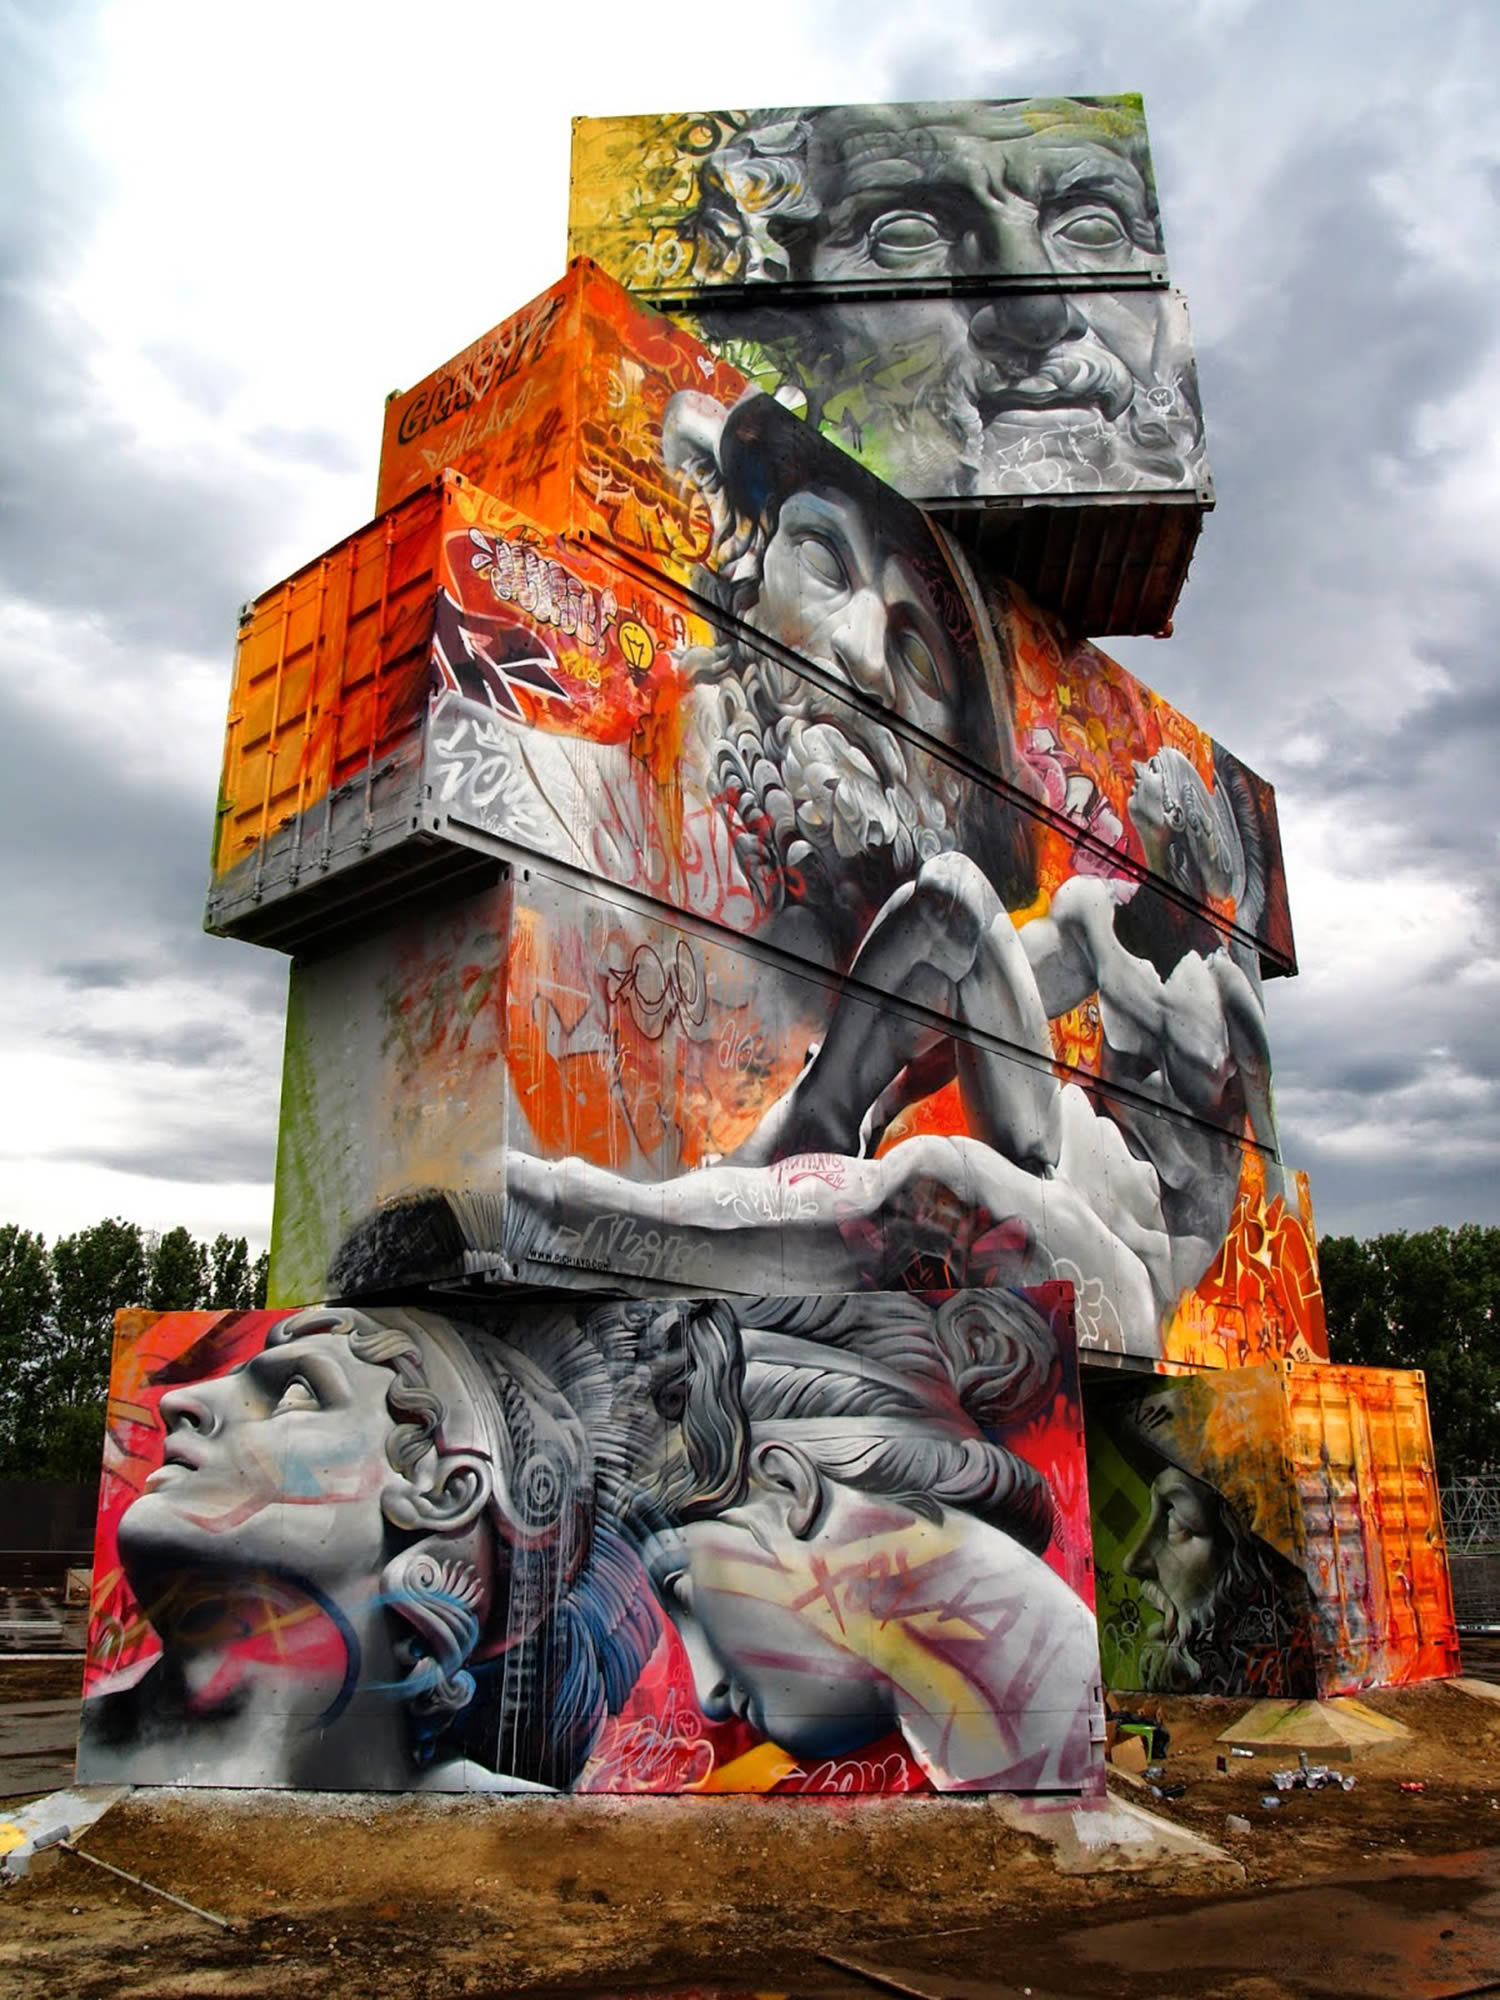 troyan figures painted on blocks, graffiti by pichi&avo